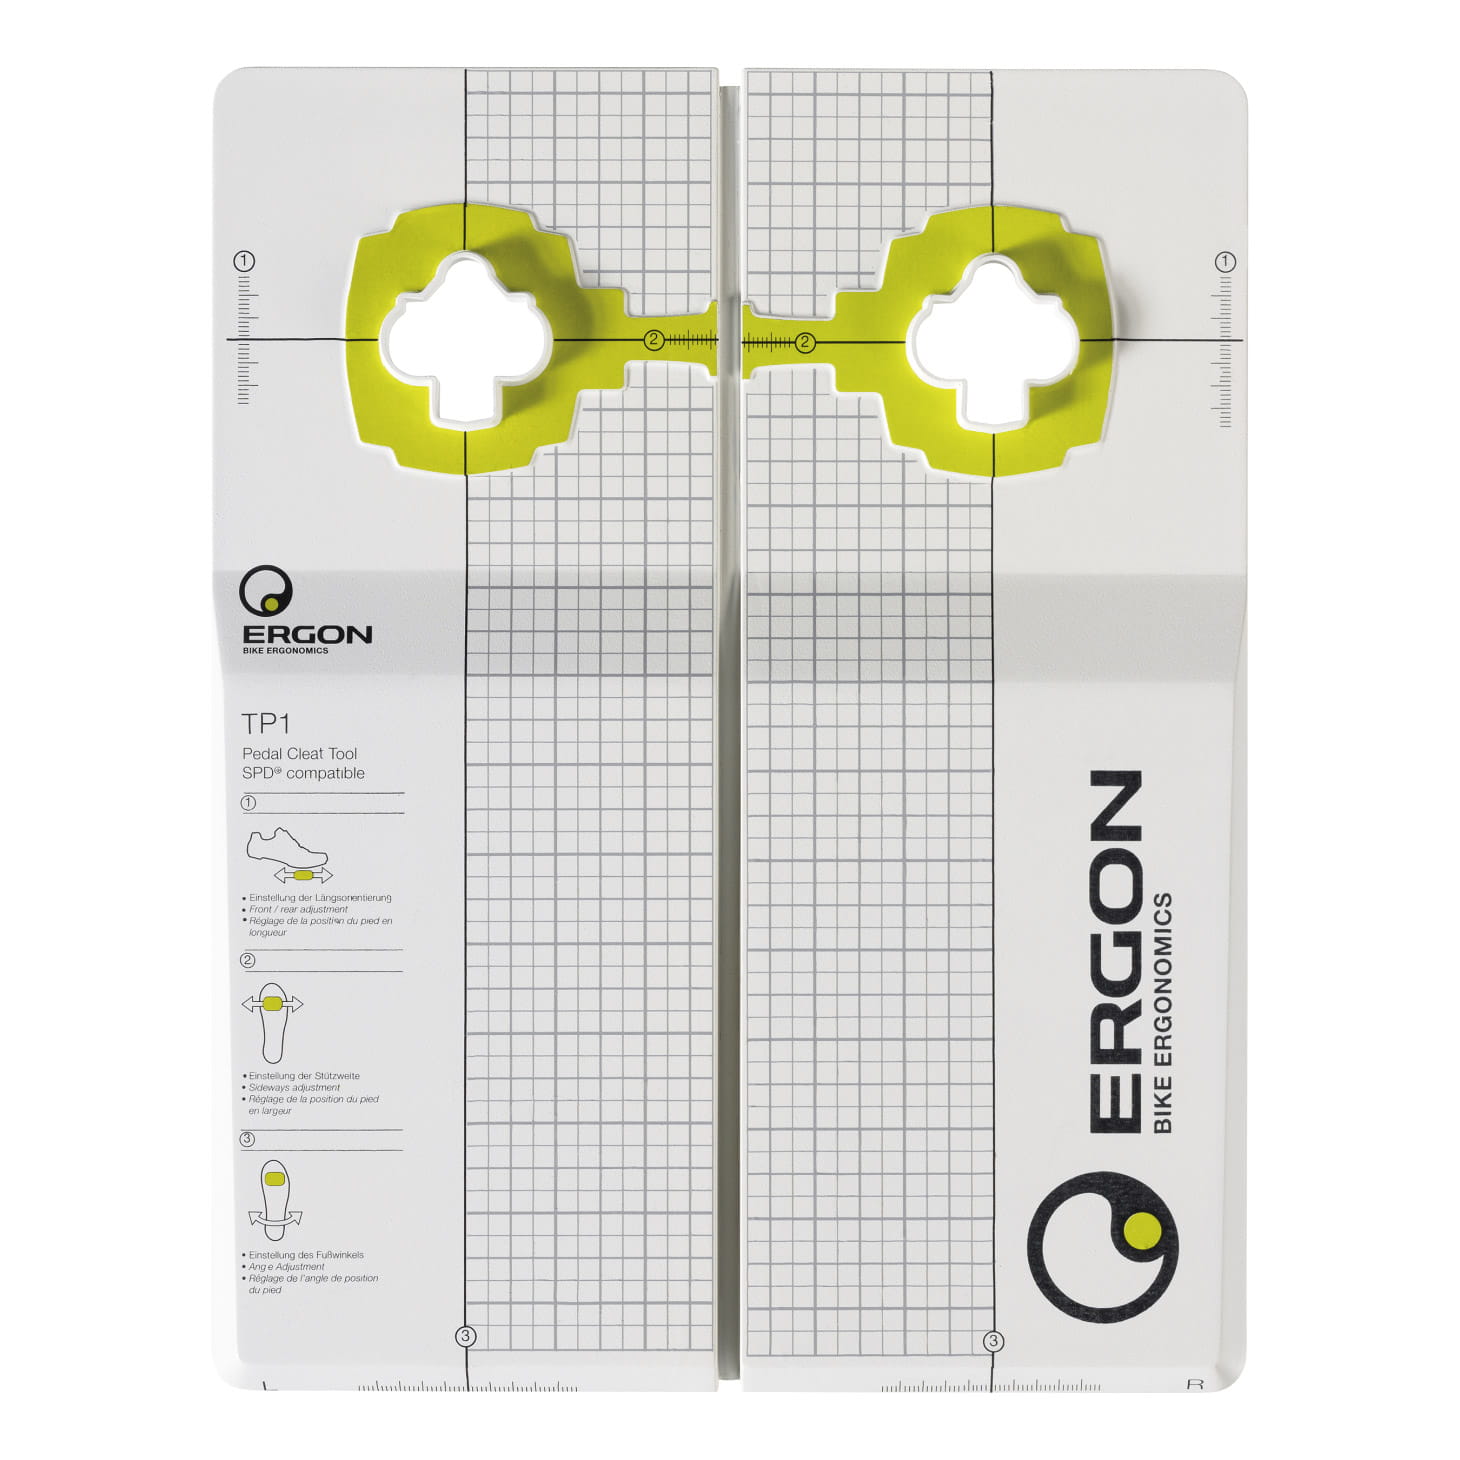 Ergon TP1 Pedal Cleat Tool Einstellwerkzeug for Klickpedale / Schuhplatten